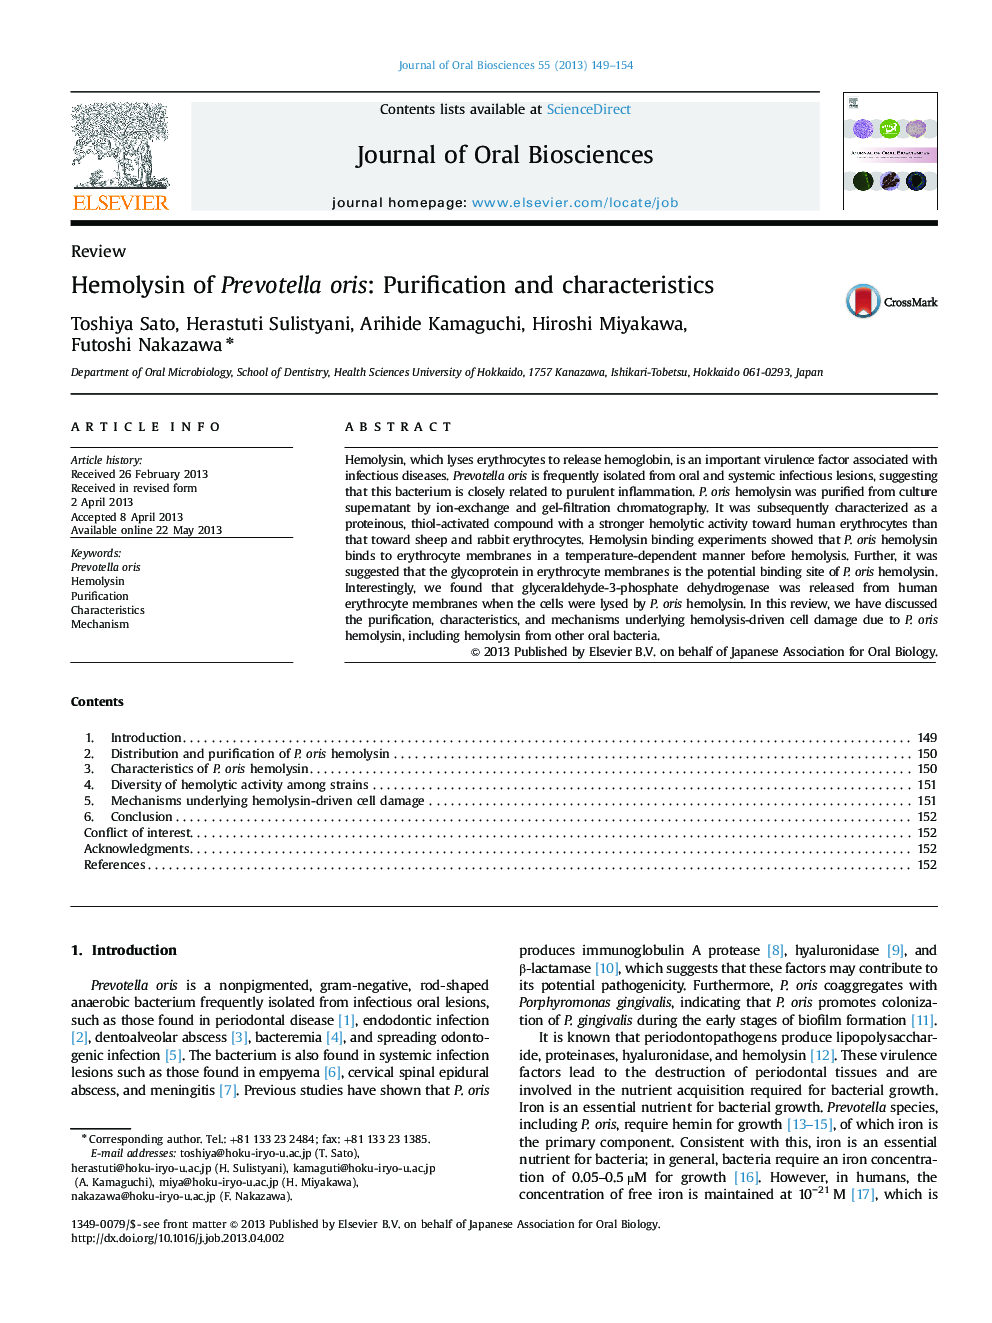 Hemolysin of Prevotella oris: Purification and characteristics